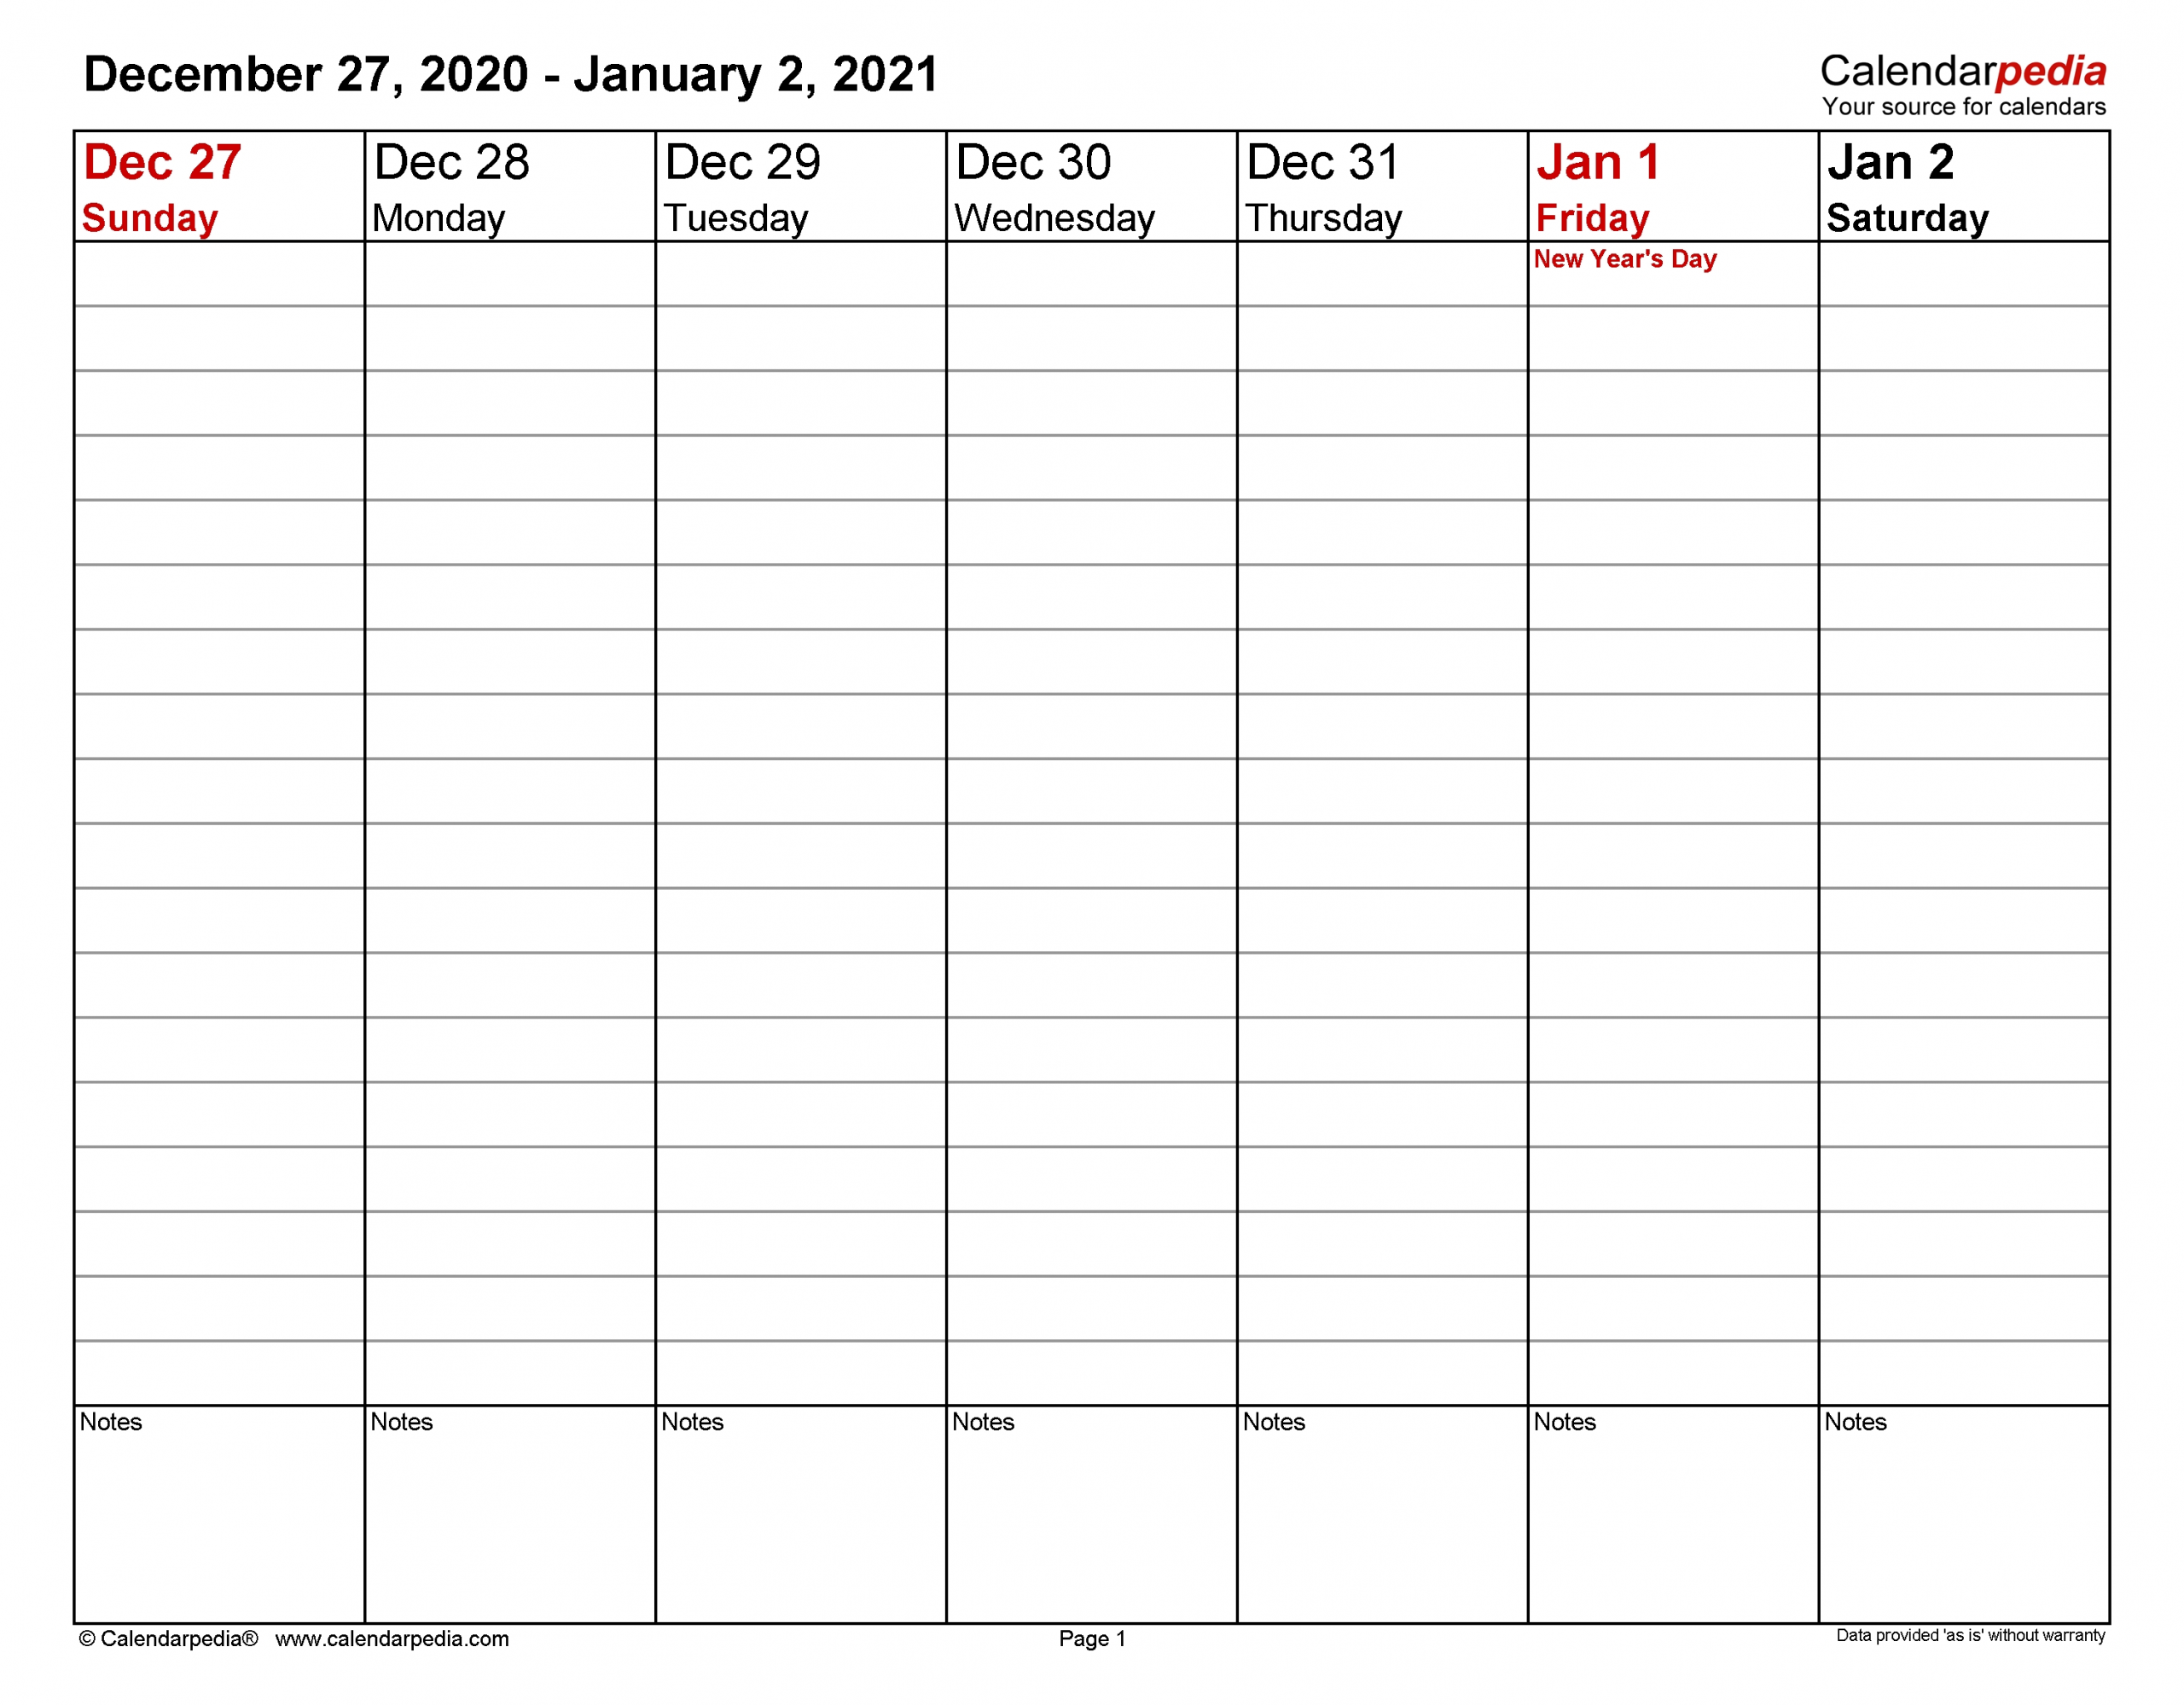 Weekly Calendars 2021 For Word - 12 Free Printable Templates-Print Hourly Calendar 2021